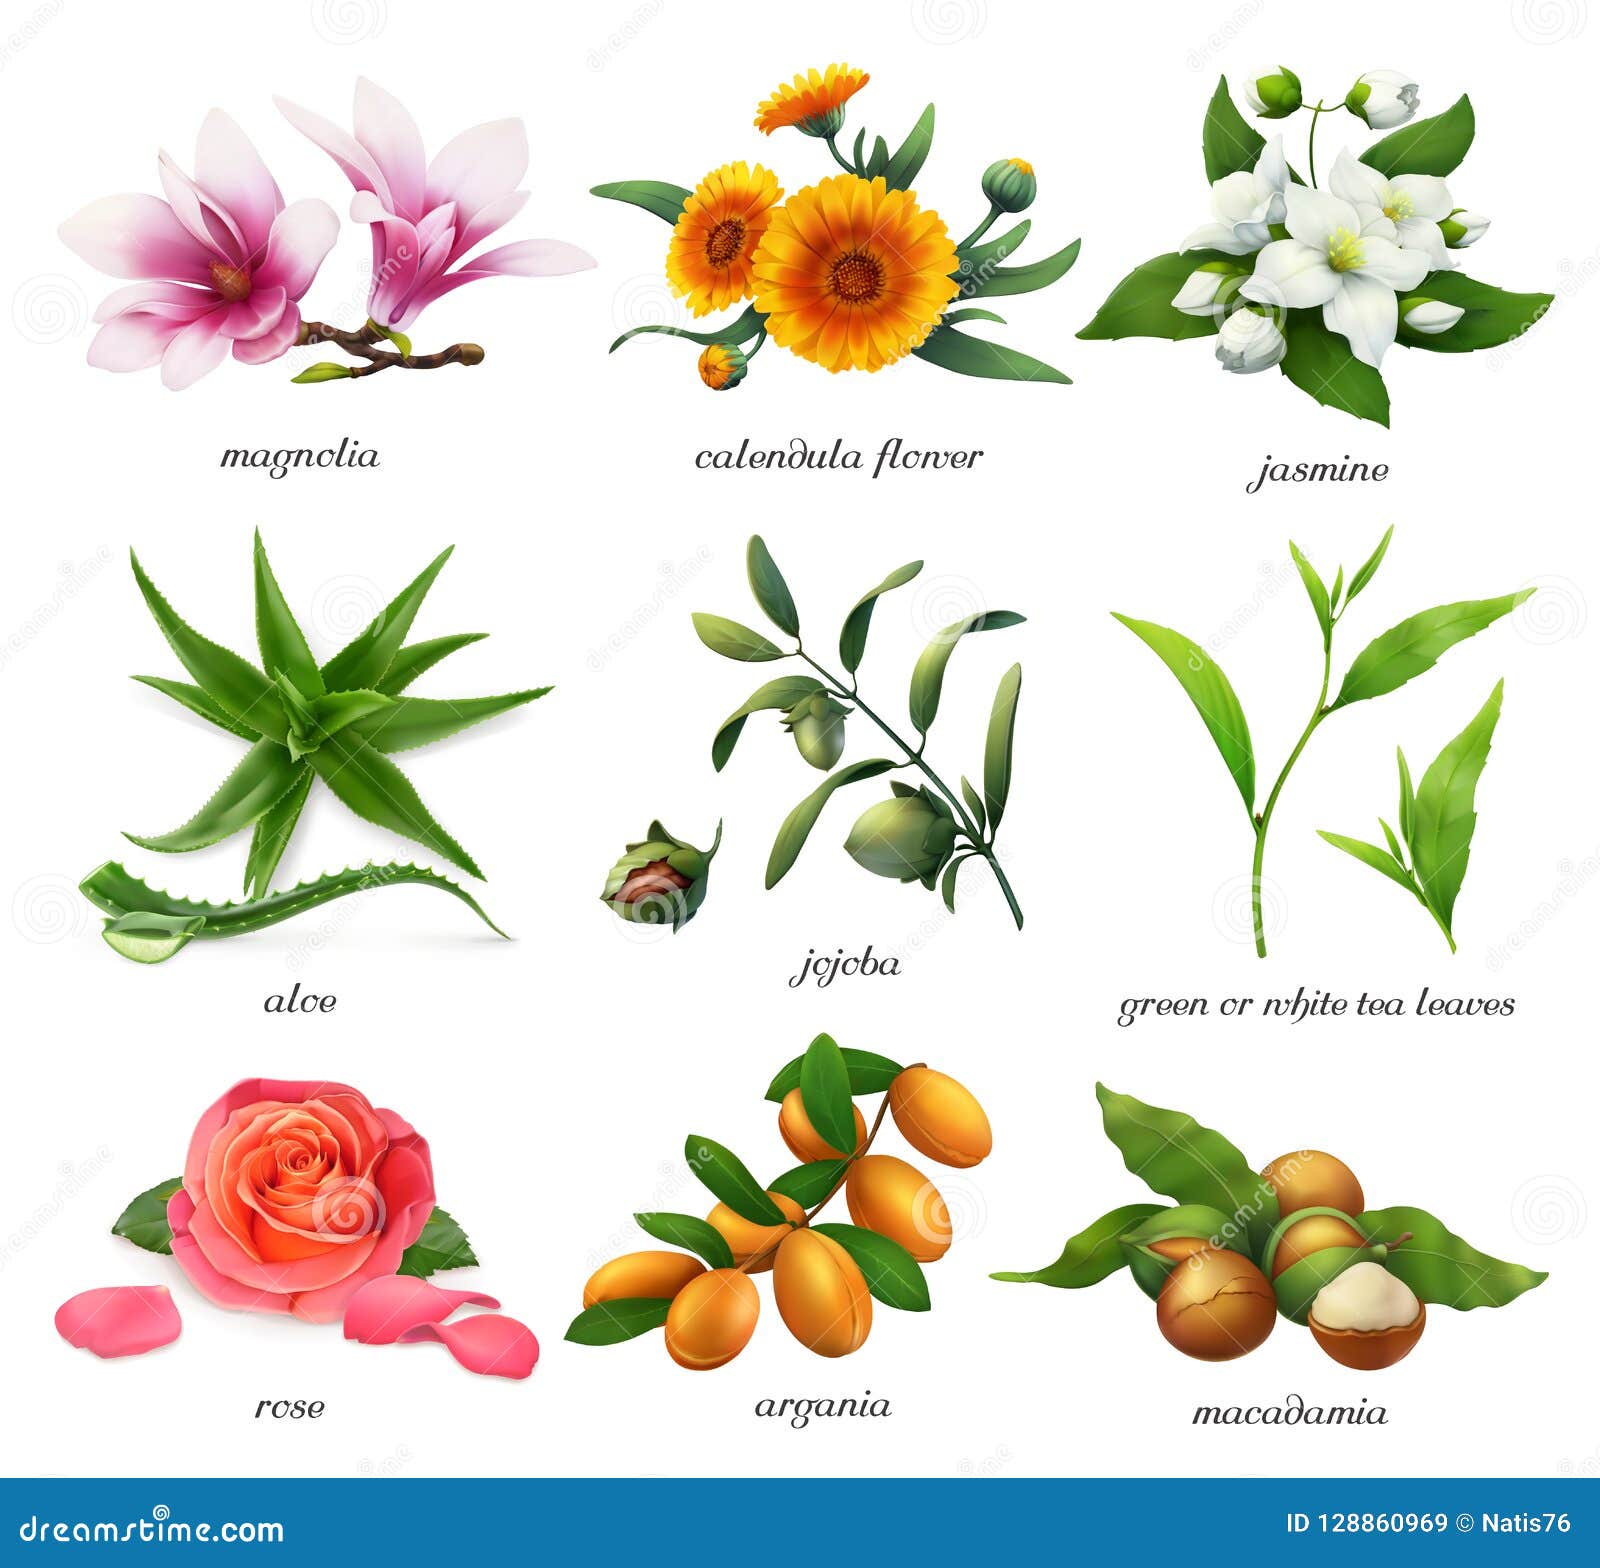 medicinal plants and flavors. magnolia, calendula flower, jasmine, aloe, jojoba, tea, rose, argania and macadamia. 3d 